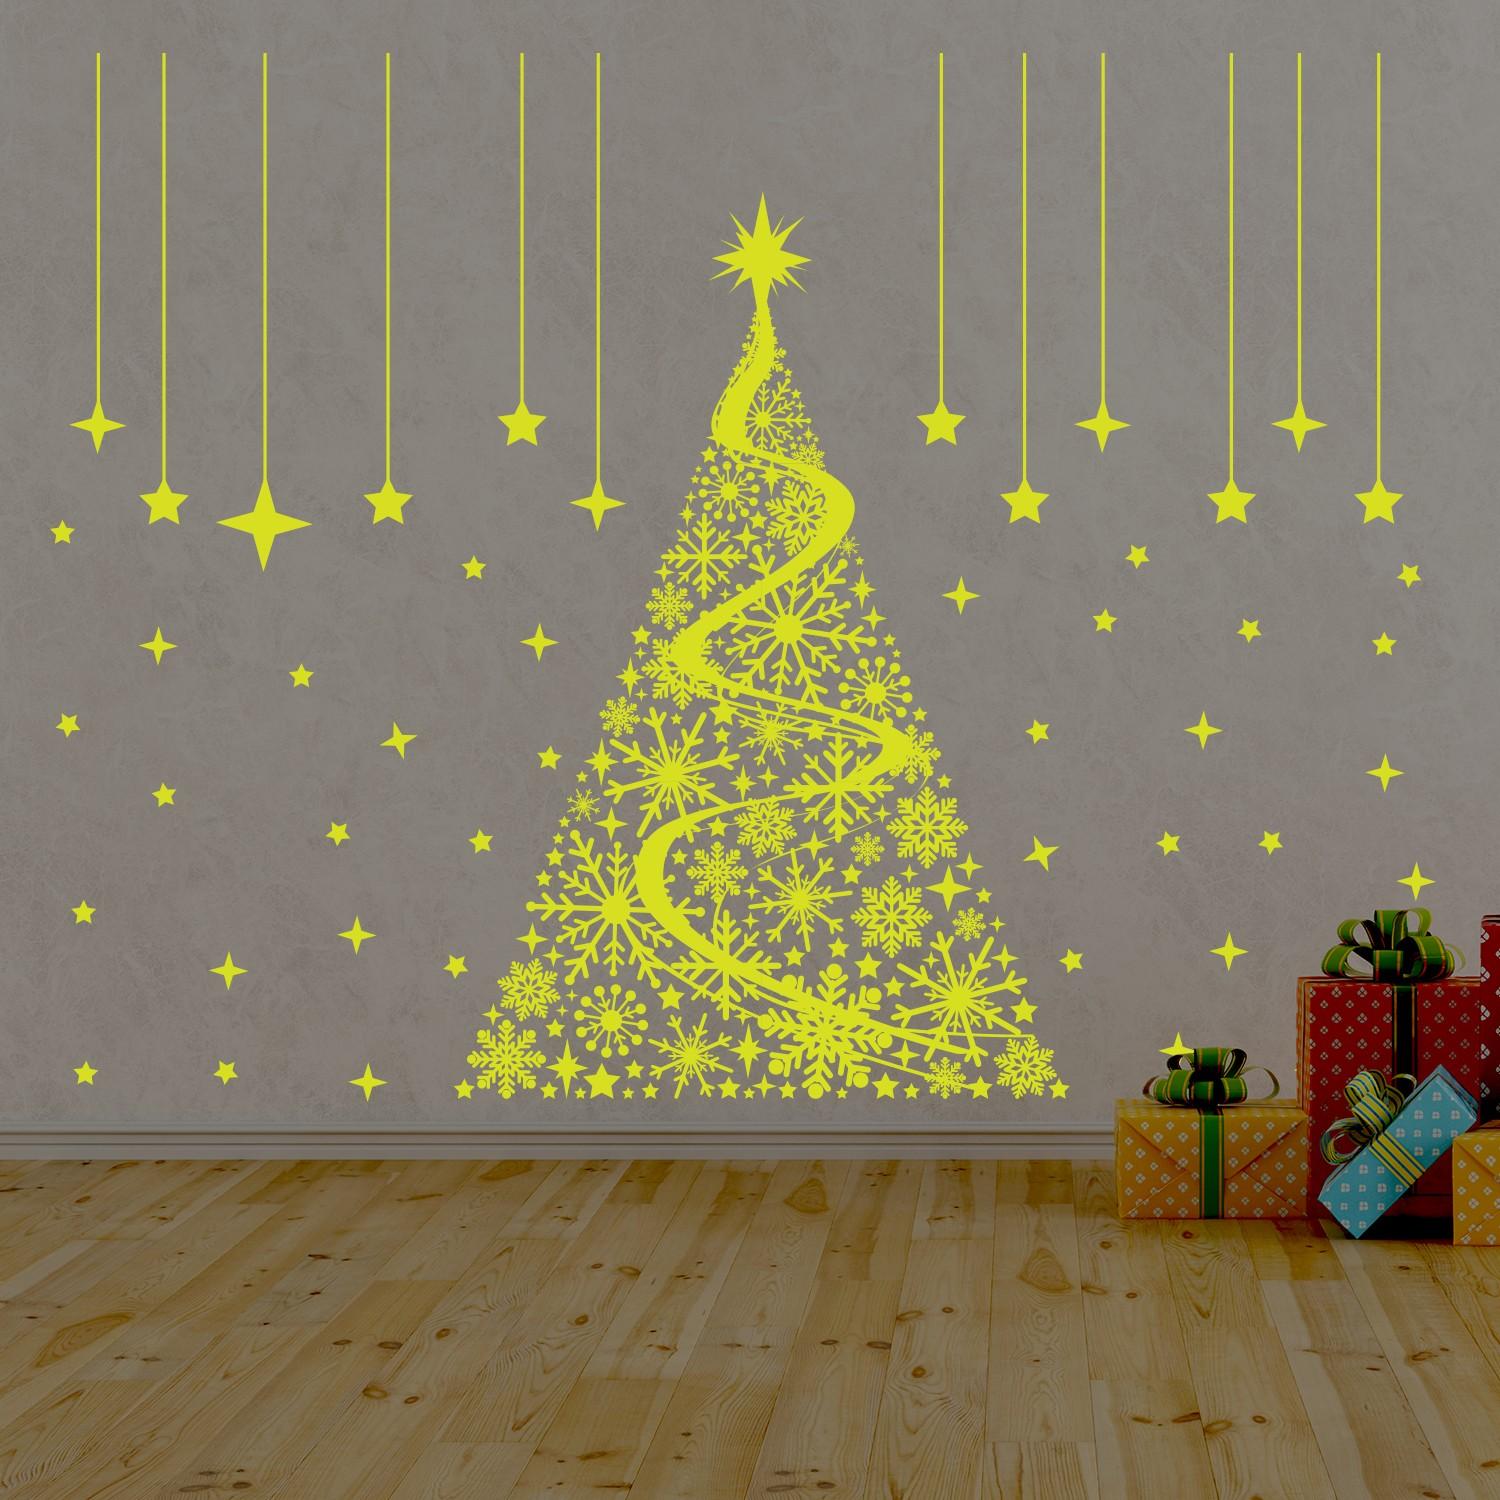 Download Dark Christmas Tree Wallpaper Hd Backgrounds Download Itl Cat - decal sunflower wallpaper roblox